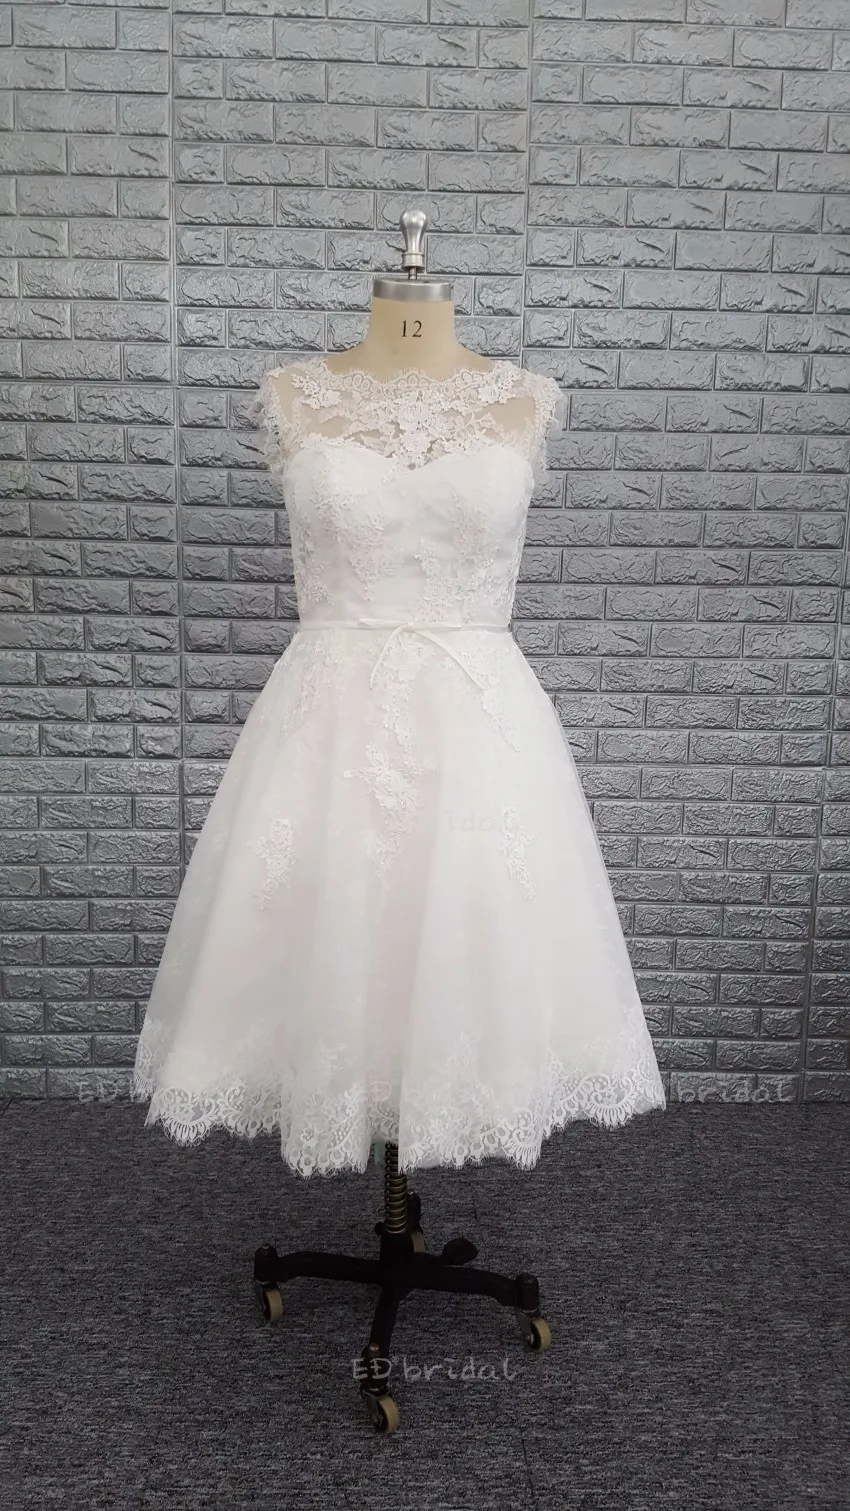 Knee Length Wedding Dress Short Bridal Dresses Lace Guangzhou Cheap Beach Wedding Gowns With Cap Sleeves Buy Alibaba Wedding Dress Wedding Dress